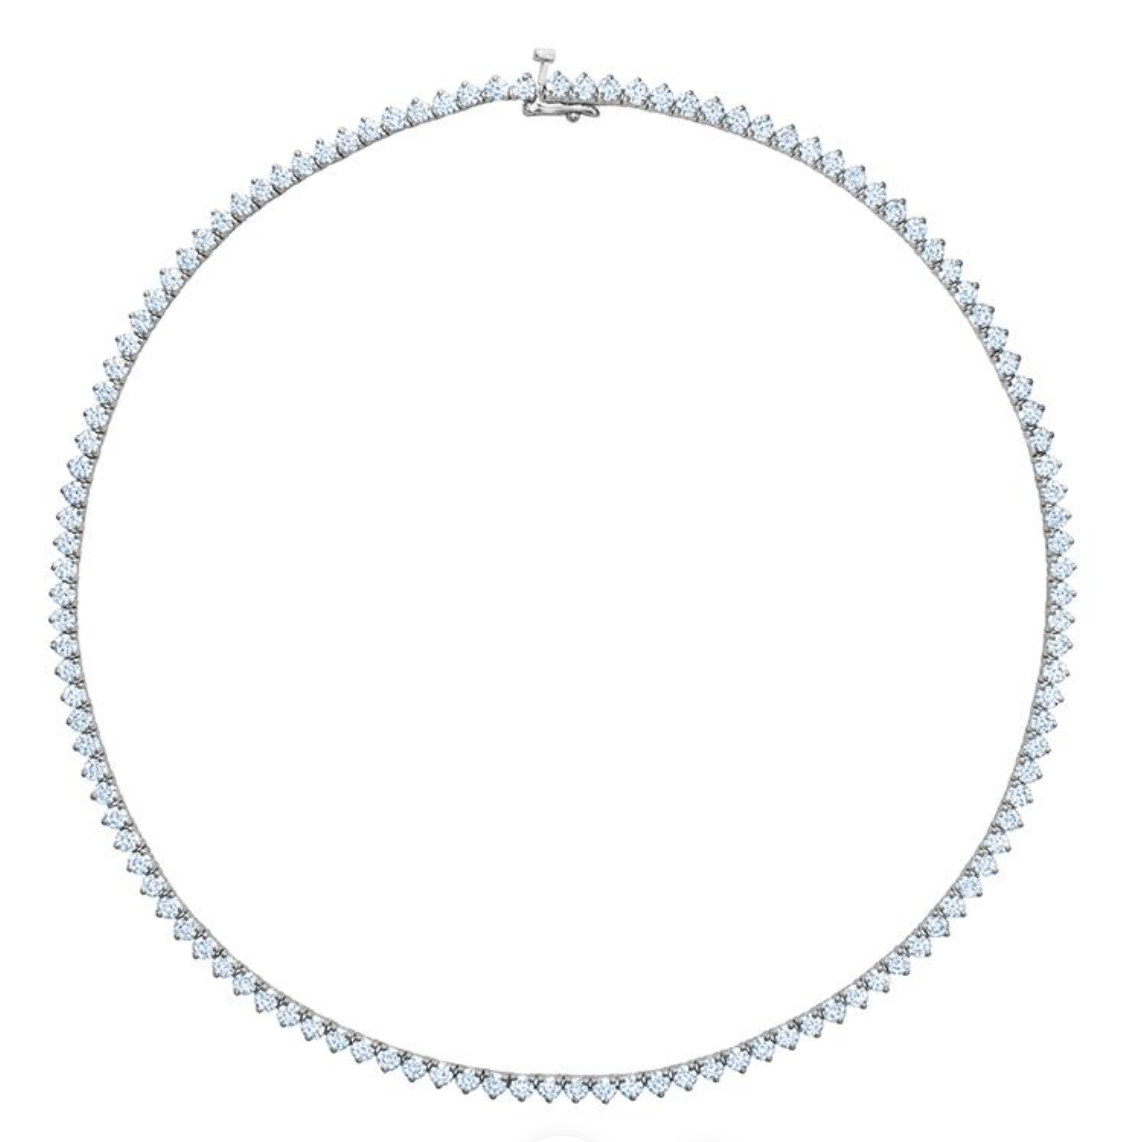 12 Carat Pear Diamond Rivière (Tennis) Necklace | Marisa Perry by Douglas  Elliott - Necklaces Jewelry Collections